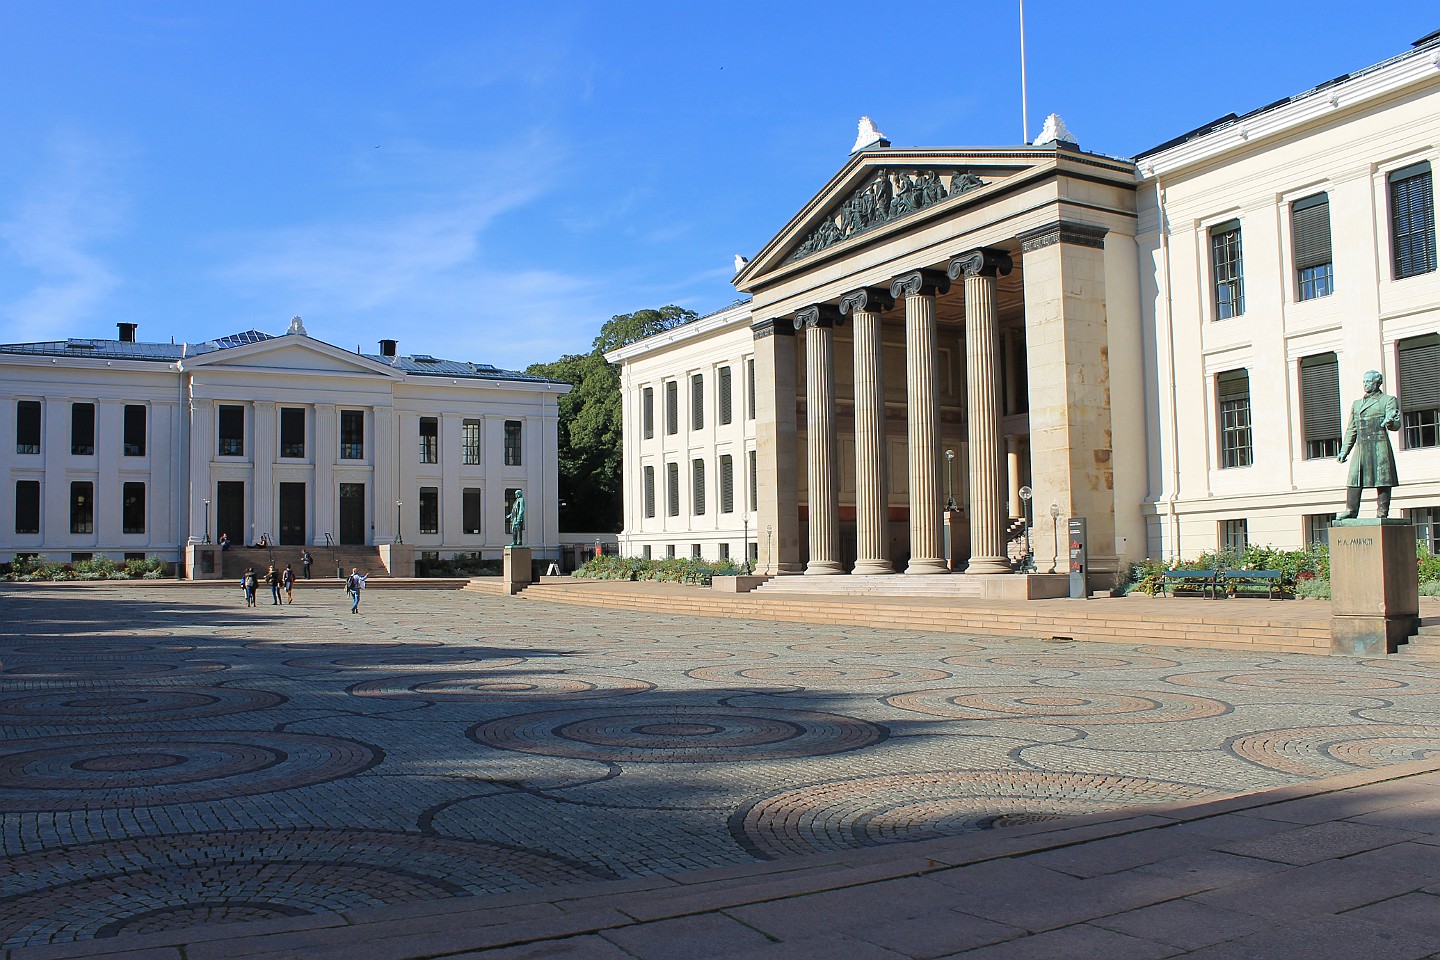 Photo album of the University of Oslo (Universitas Osloensis)